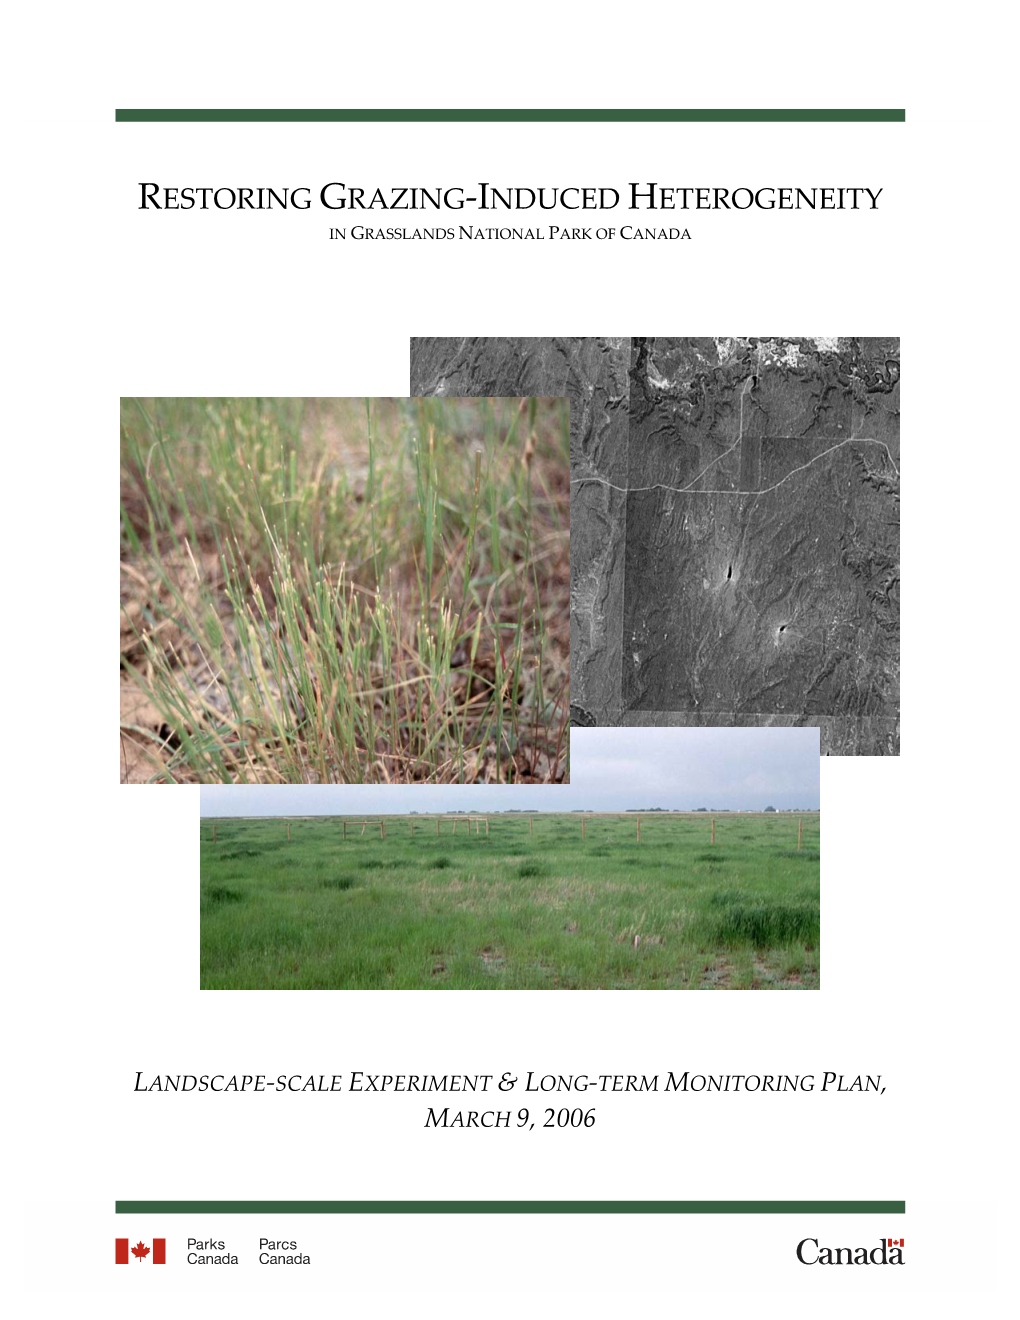 Restoring Grazing-Induced Heterogeneity in Grasslands National Park of Canada